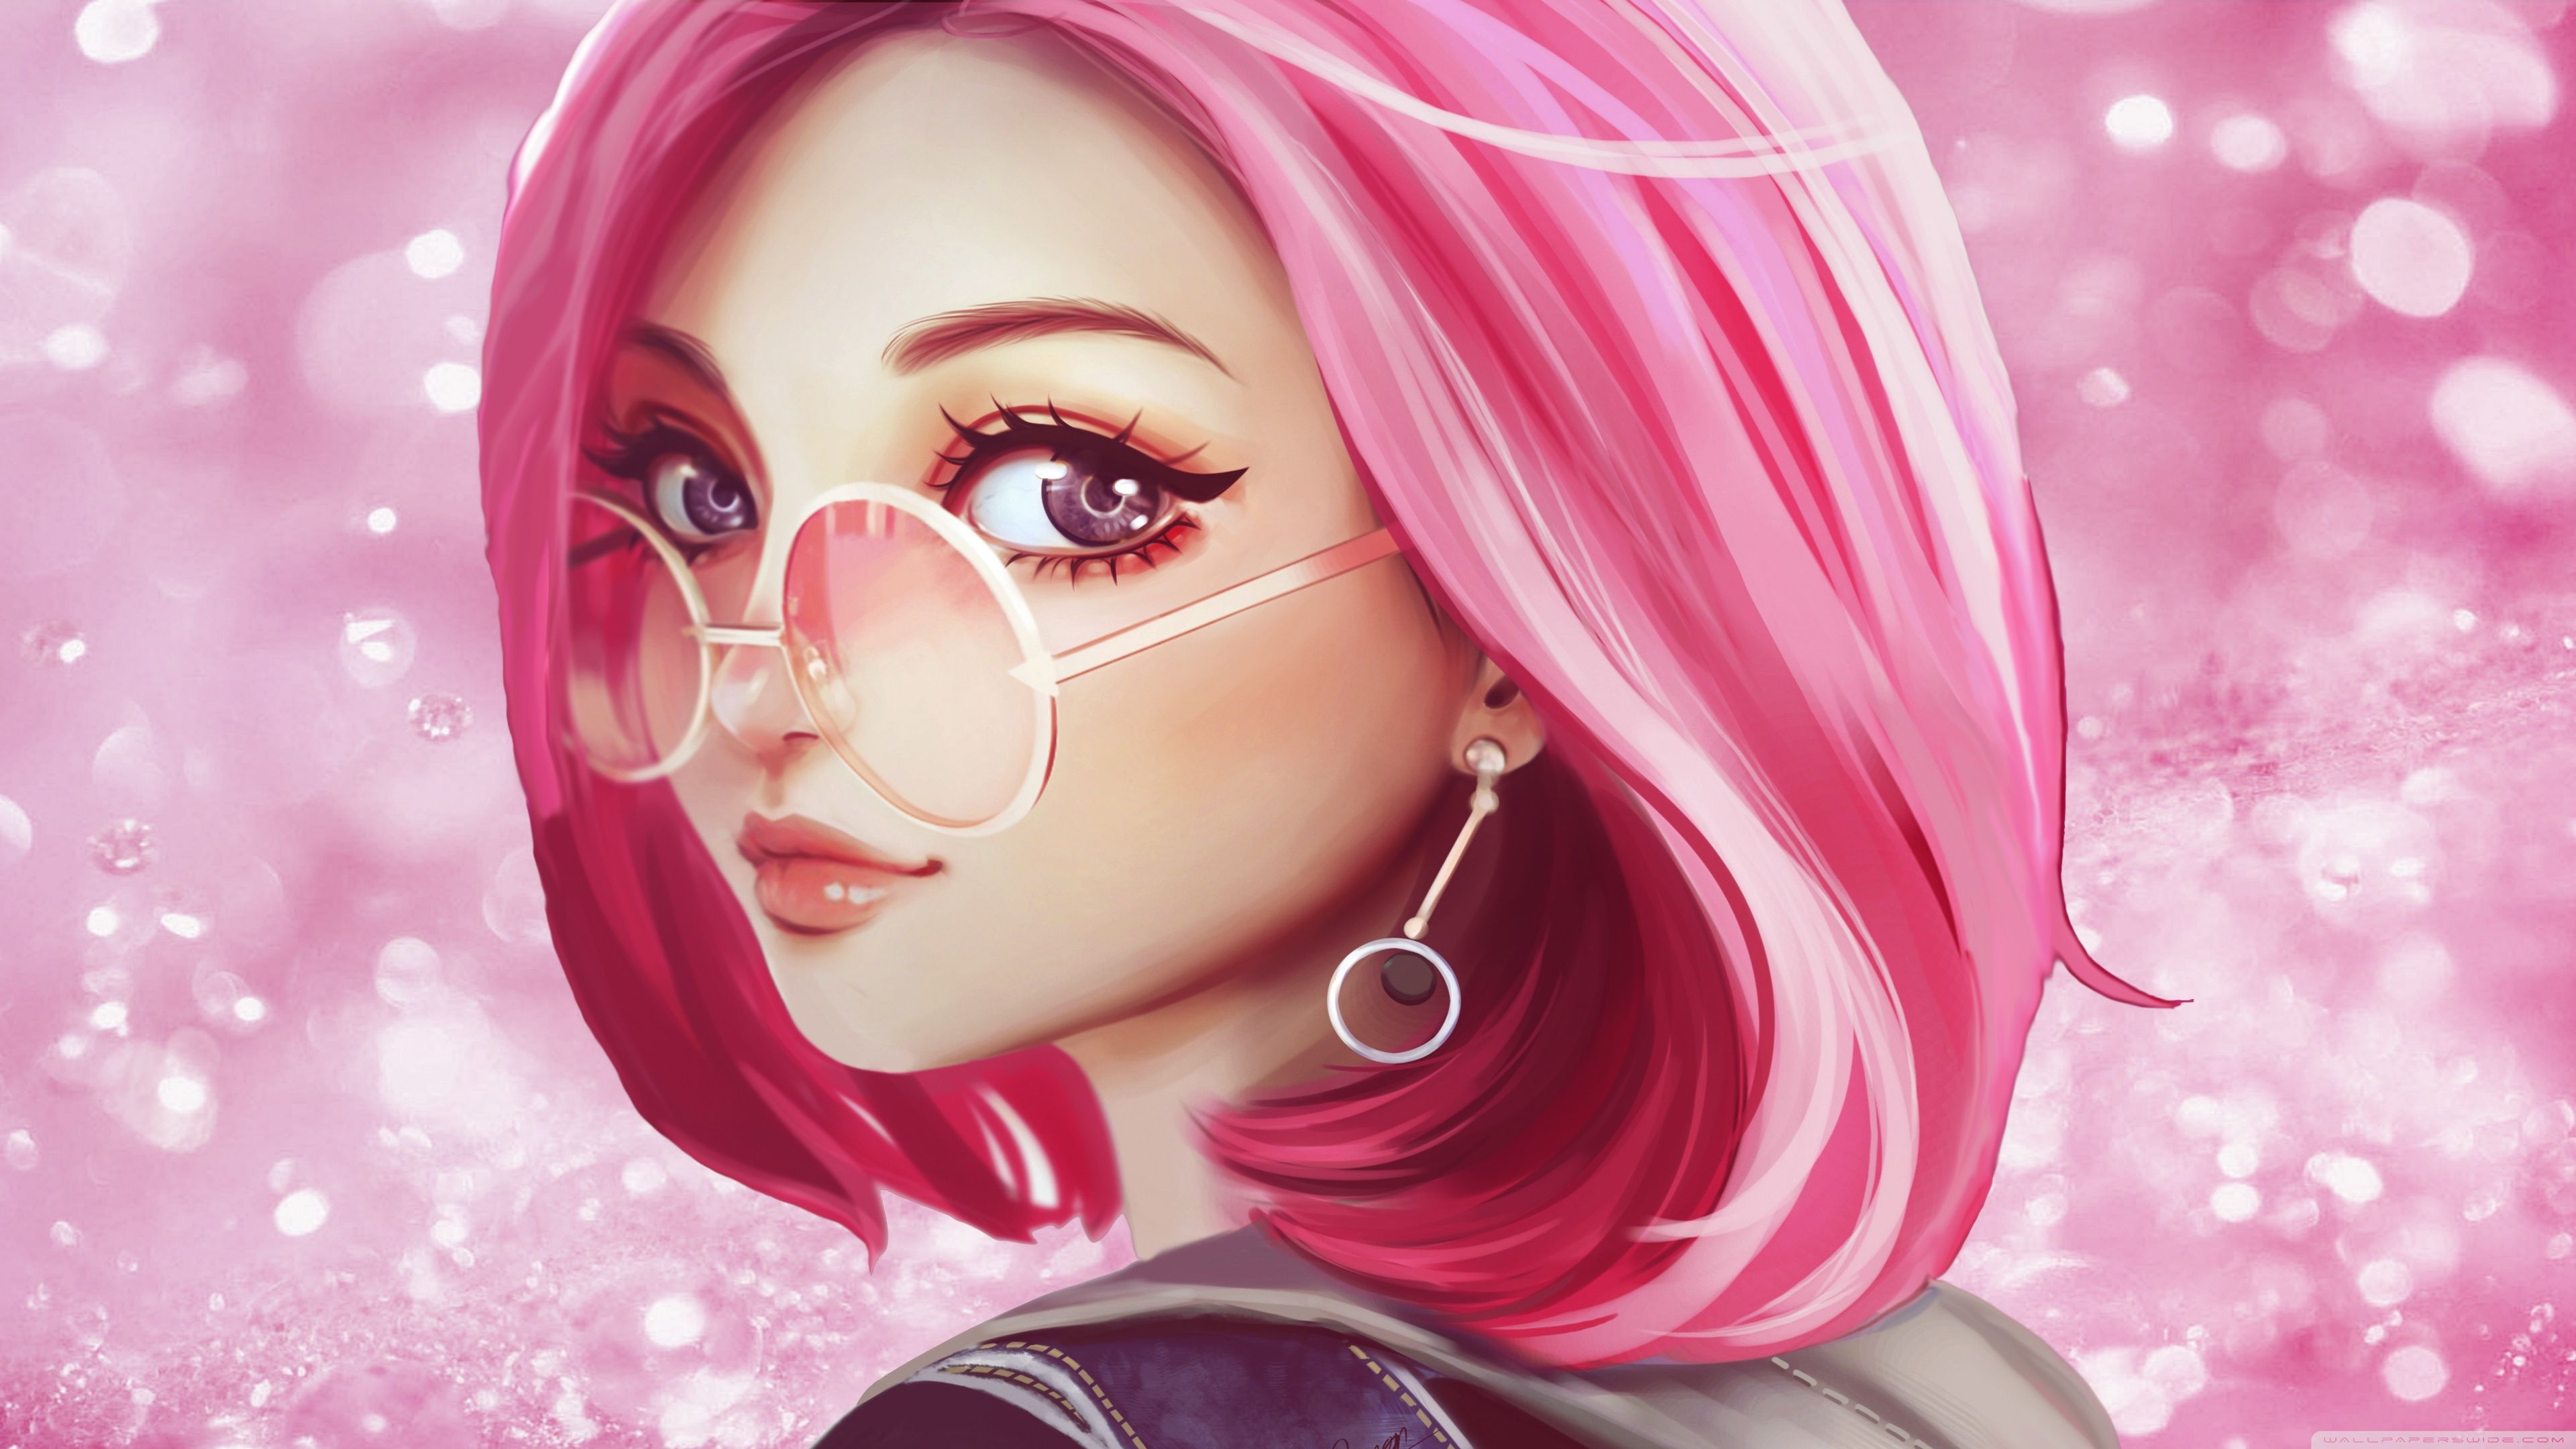 Cute Girl Pink Hair Sunglasses Digital Art Drawing Ultra HD Desktop Background Wallpaper for 4K UHD TV, Widescreen & UltraWide Desktop & Laptop, Multi Display, Dual & Triple Monitor, Tablet